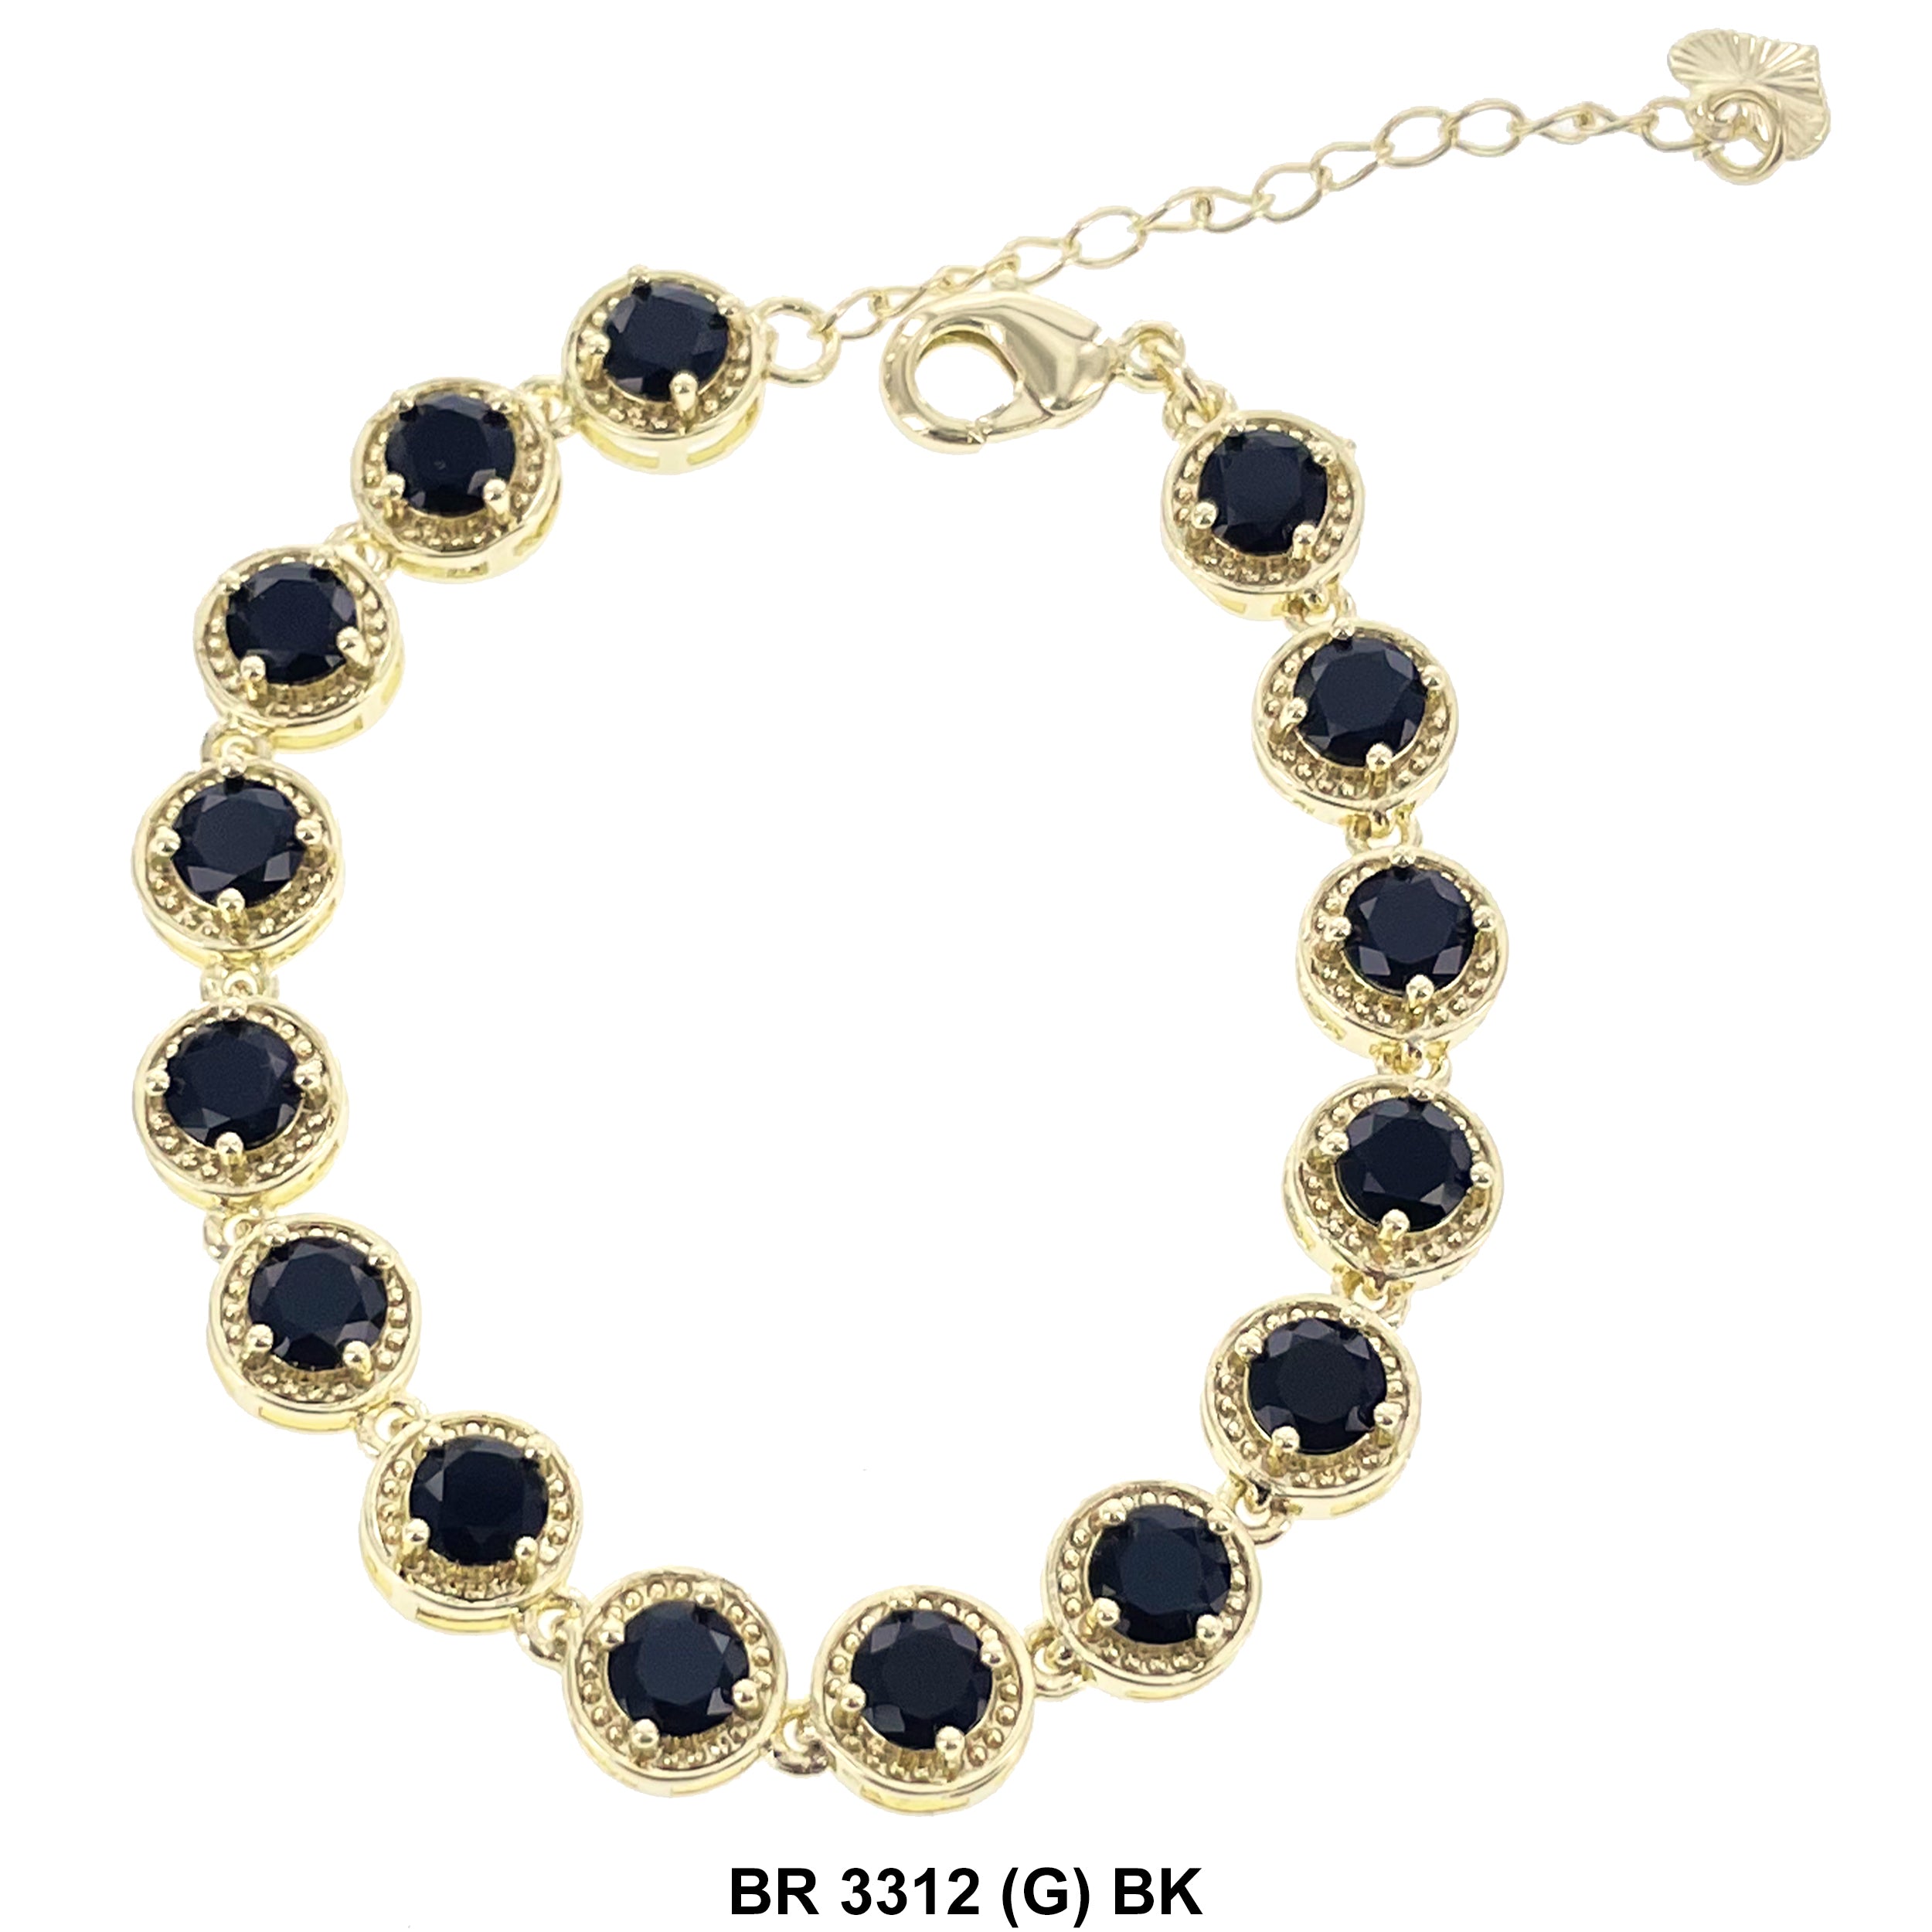 Cubic Zirconia Tennis Bracelet BR 3312 (G) BK